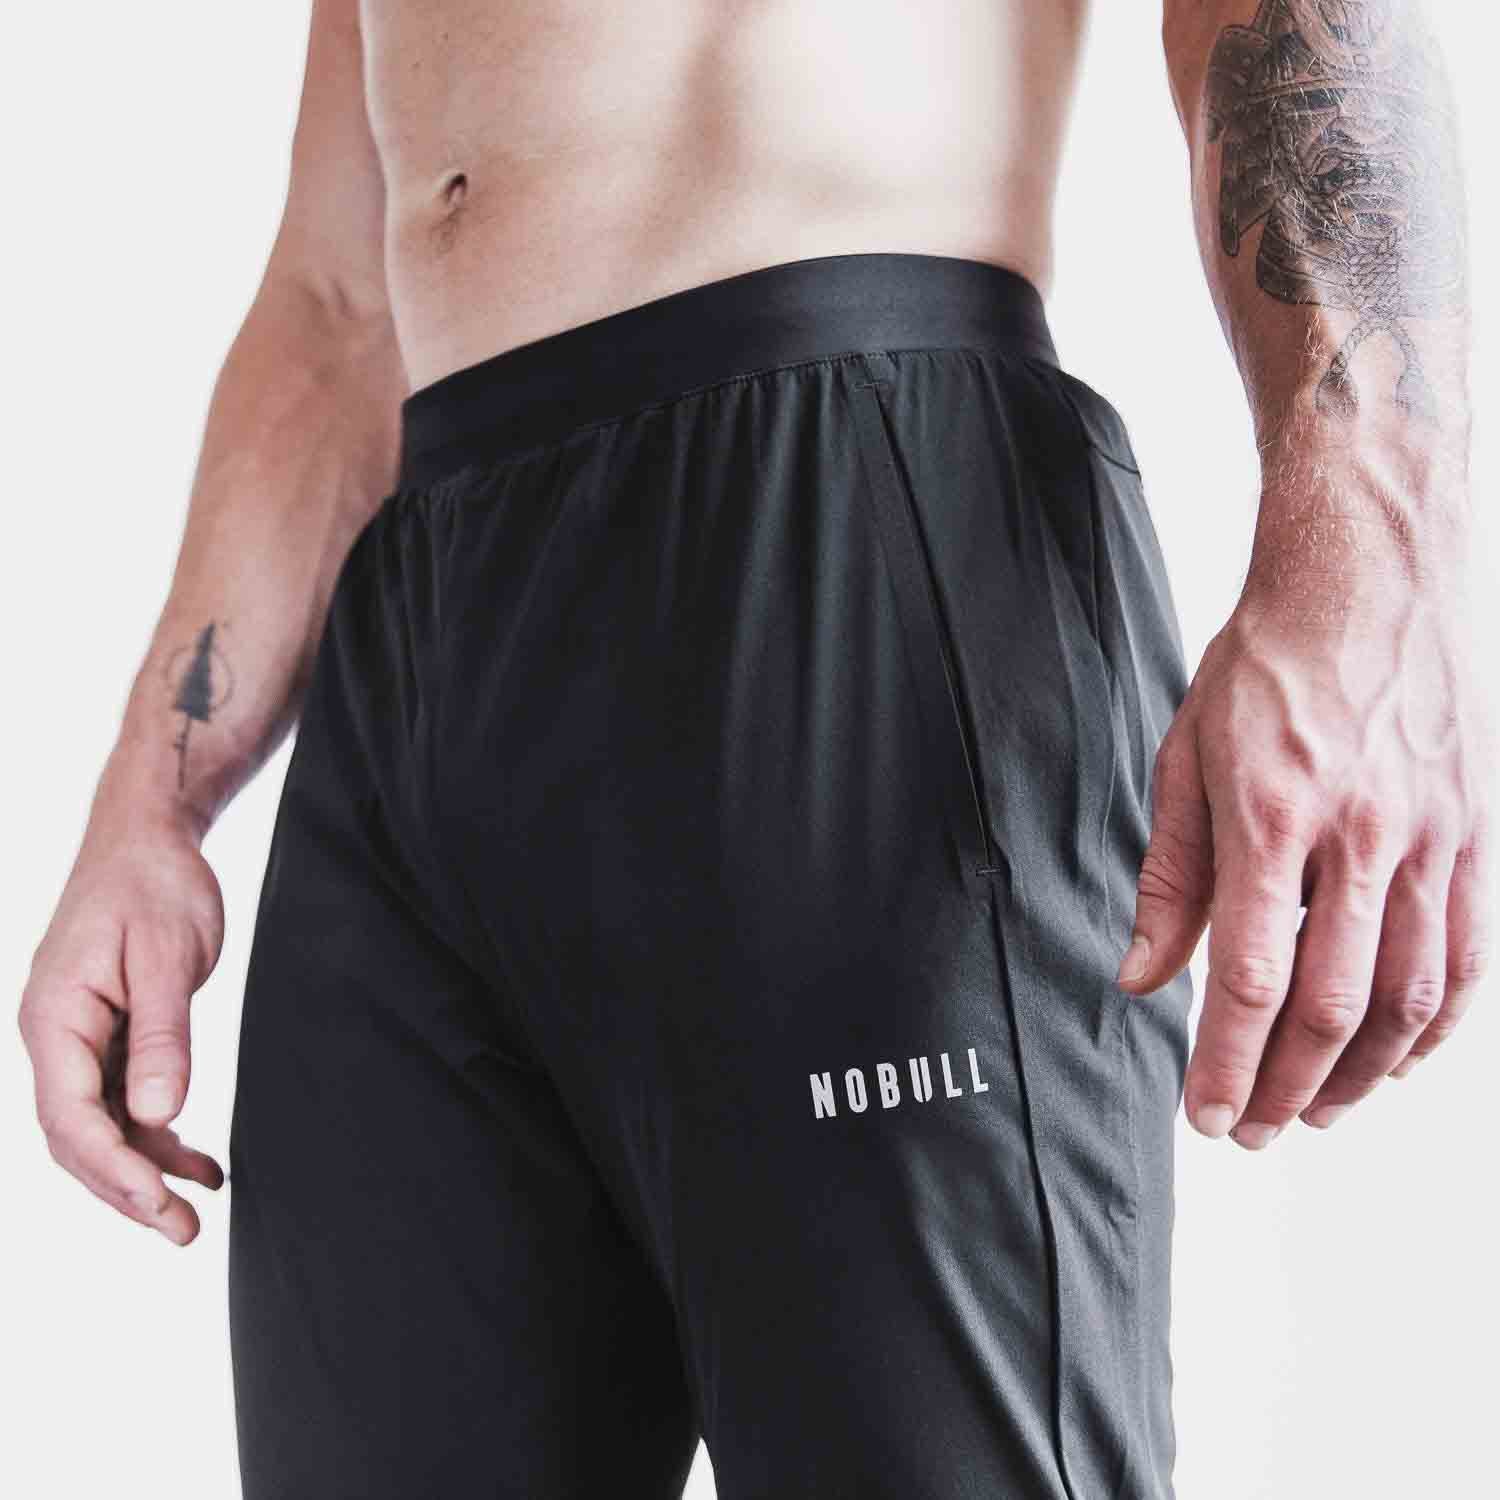 New Balance Men's Impact Run Woven Pant, Black, Medium : :  Clothing, Shoes & Accessories